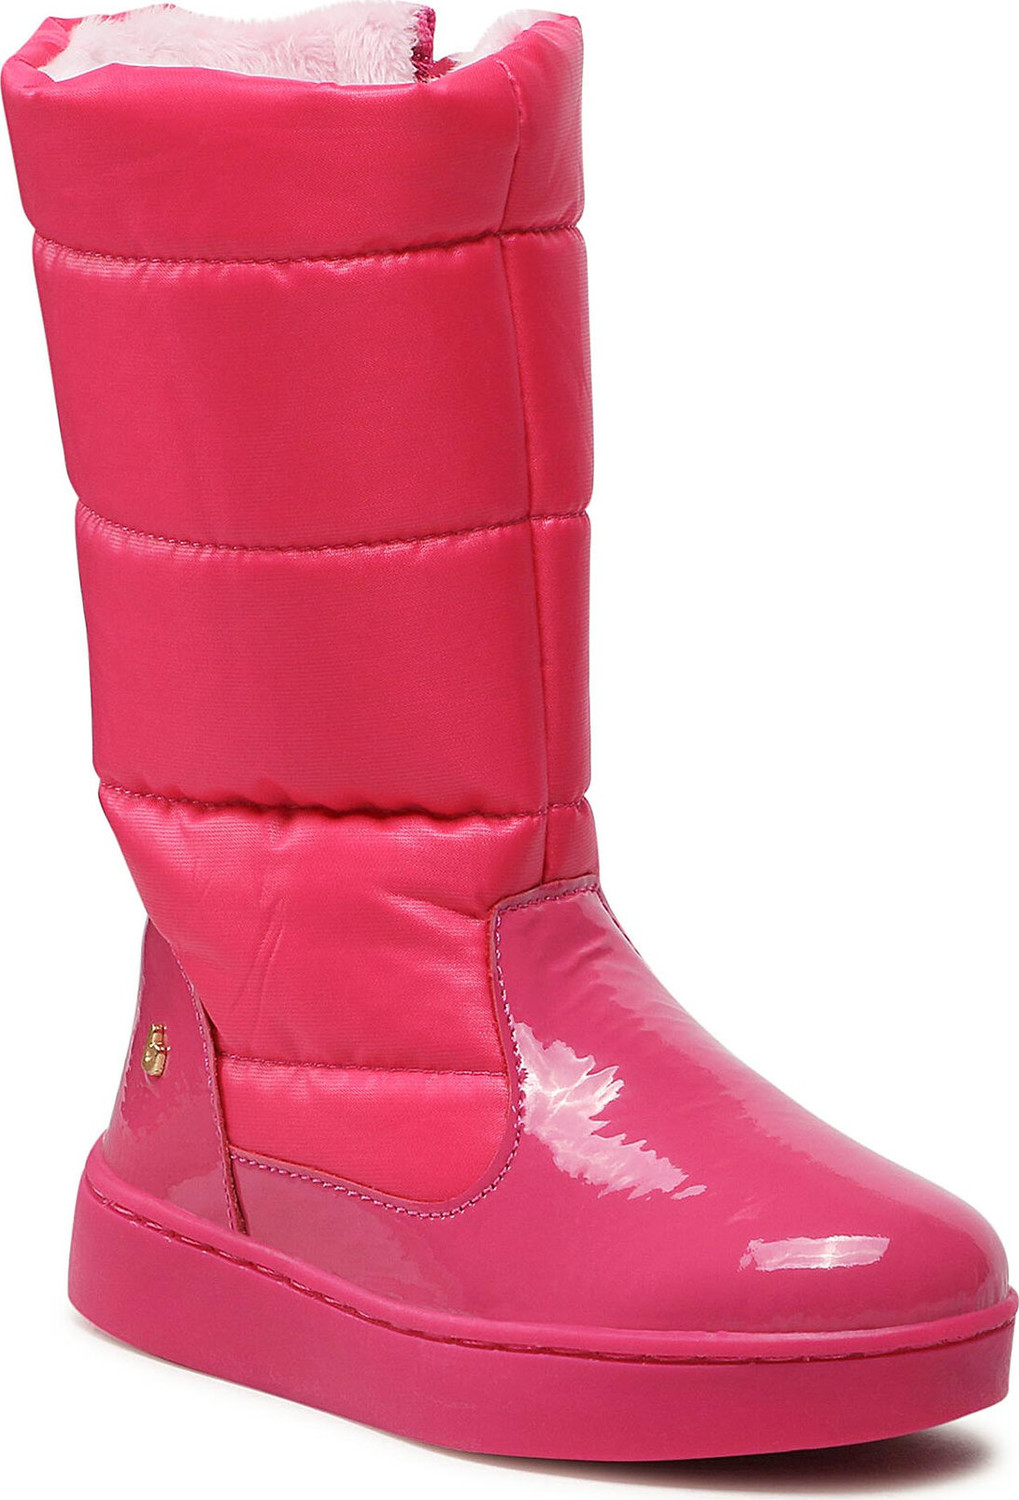 Snehule Bibi Urban Boots 1049129 Hot Pink/Verniz